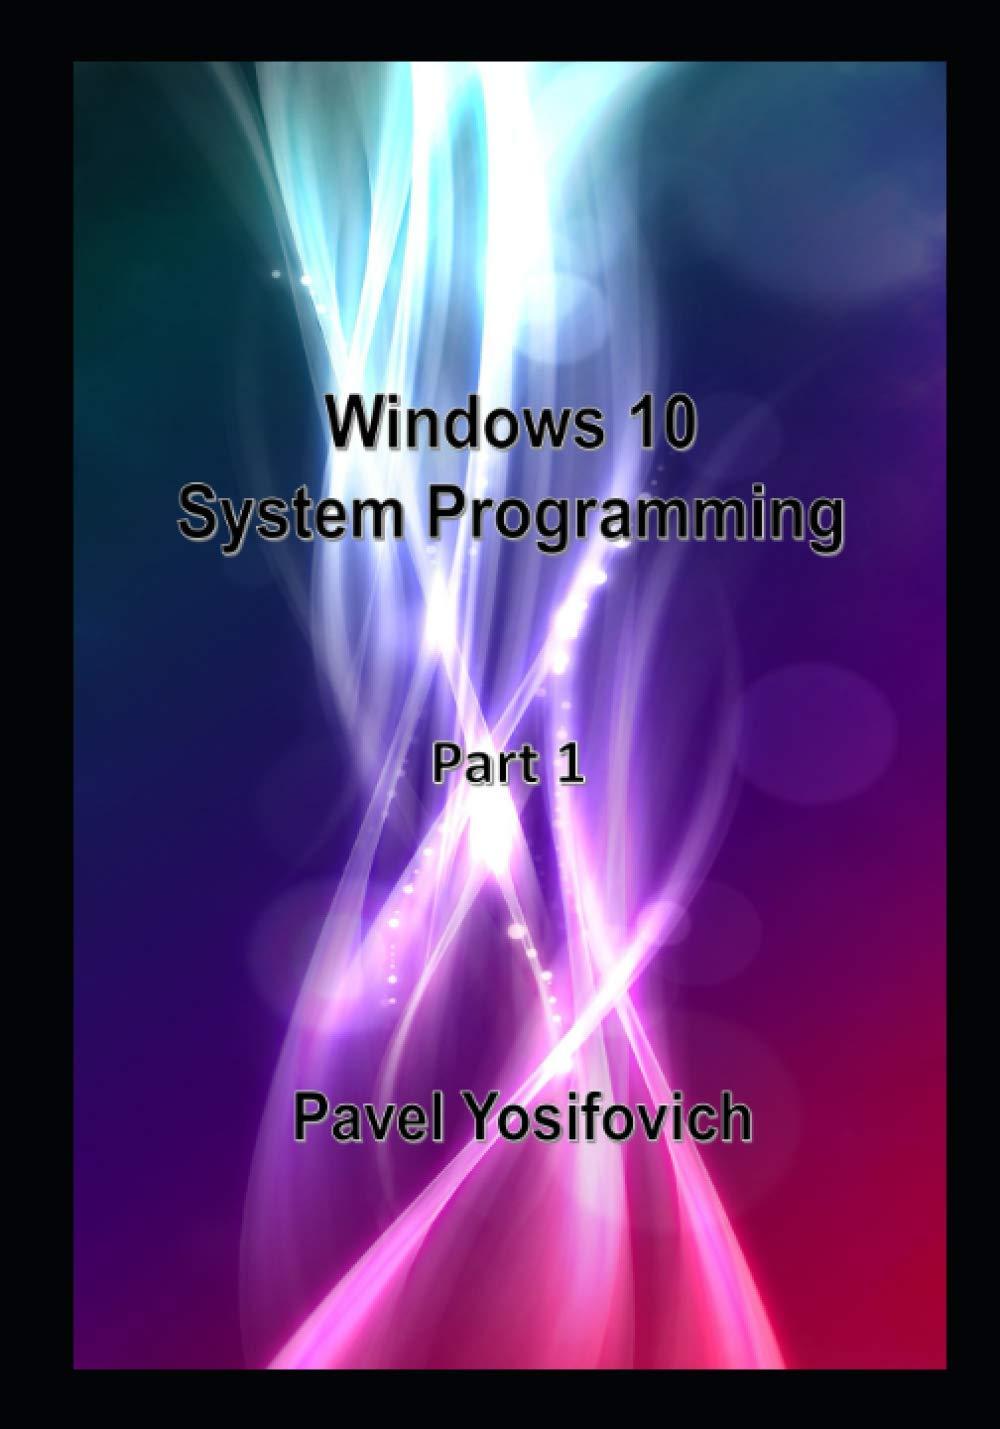 windows 10 system programming part 1 1st edition pavel yosifovich b086y6m7lh, 979-8634170381